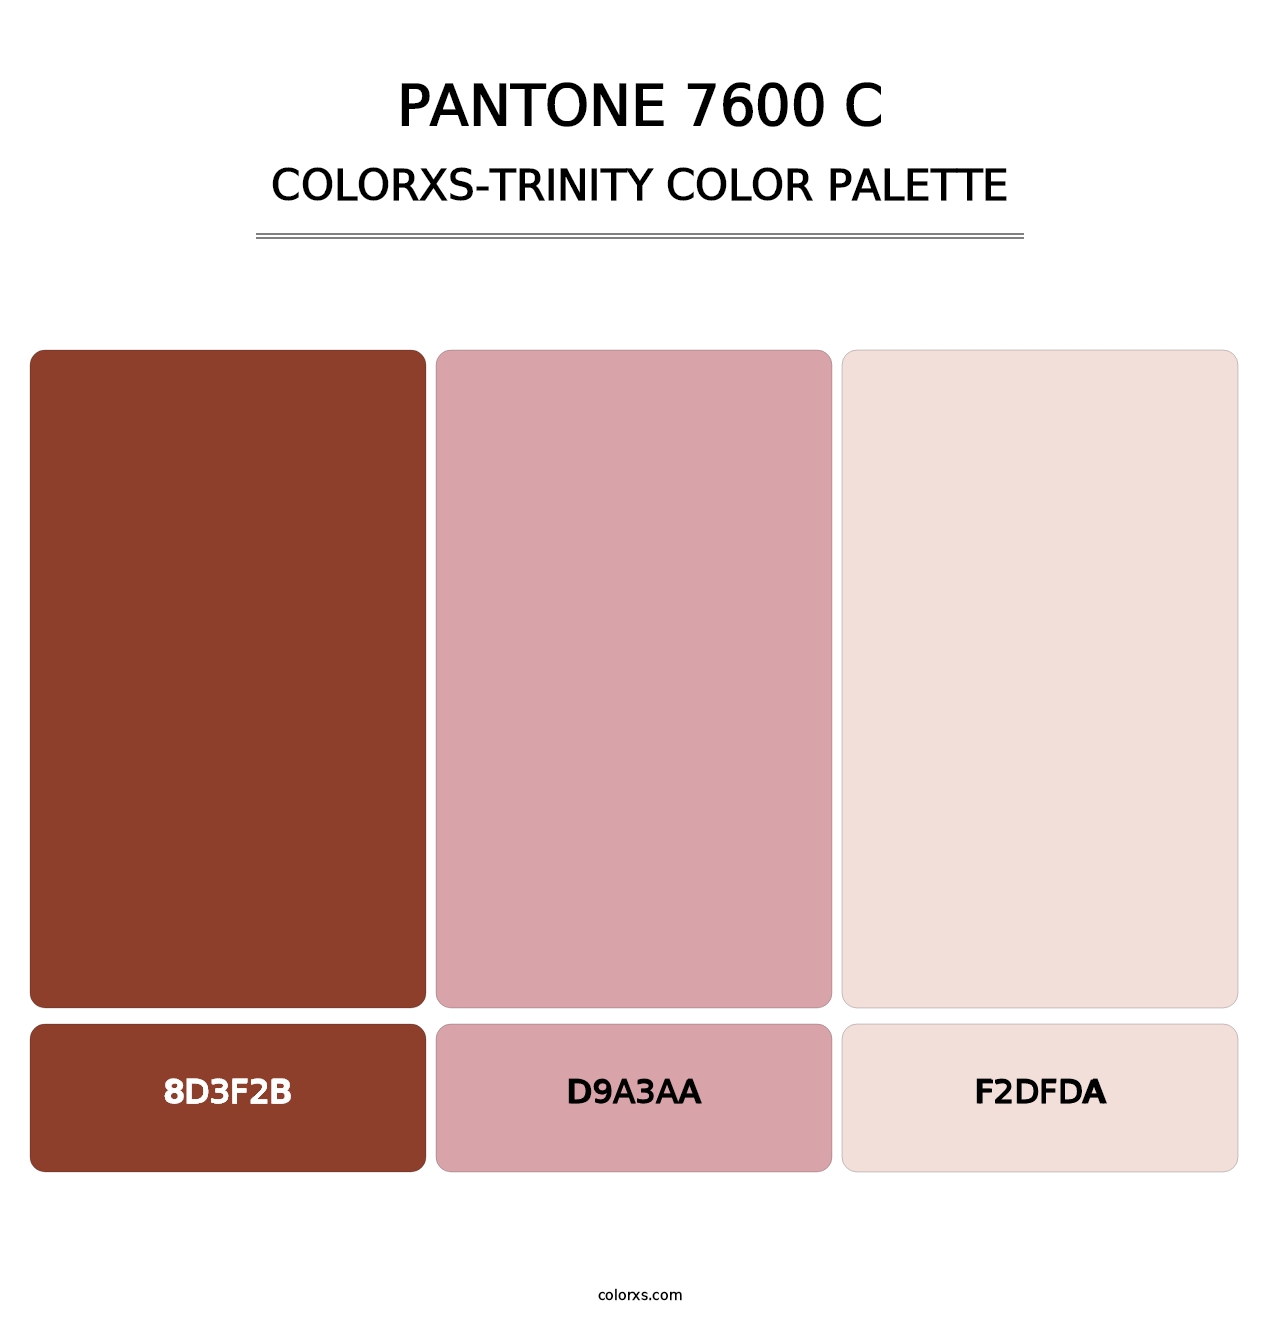 PANTONE 7600 C - Colorxs Trinity Palette